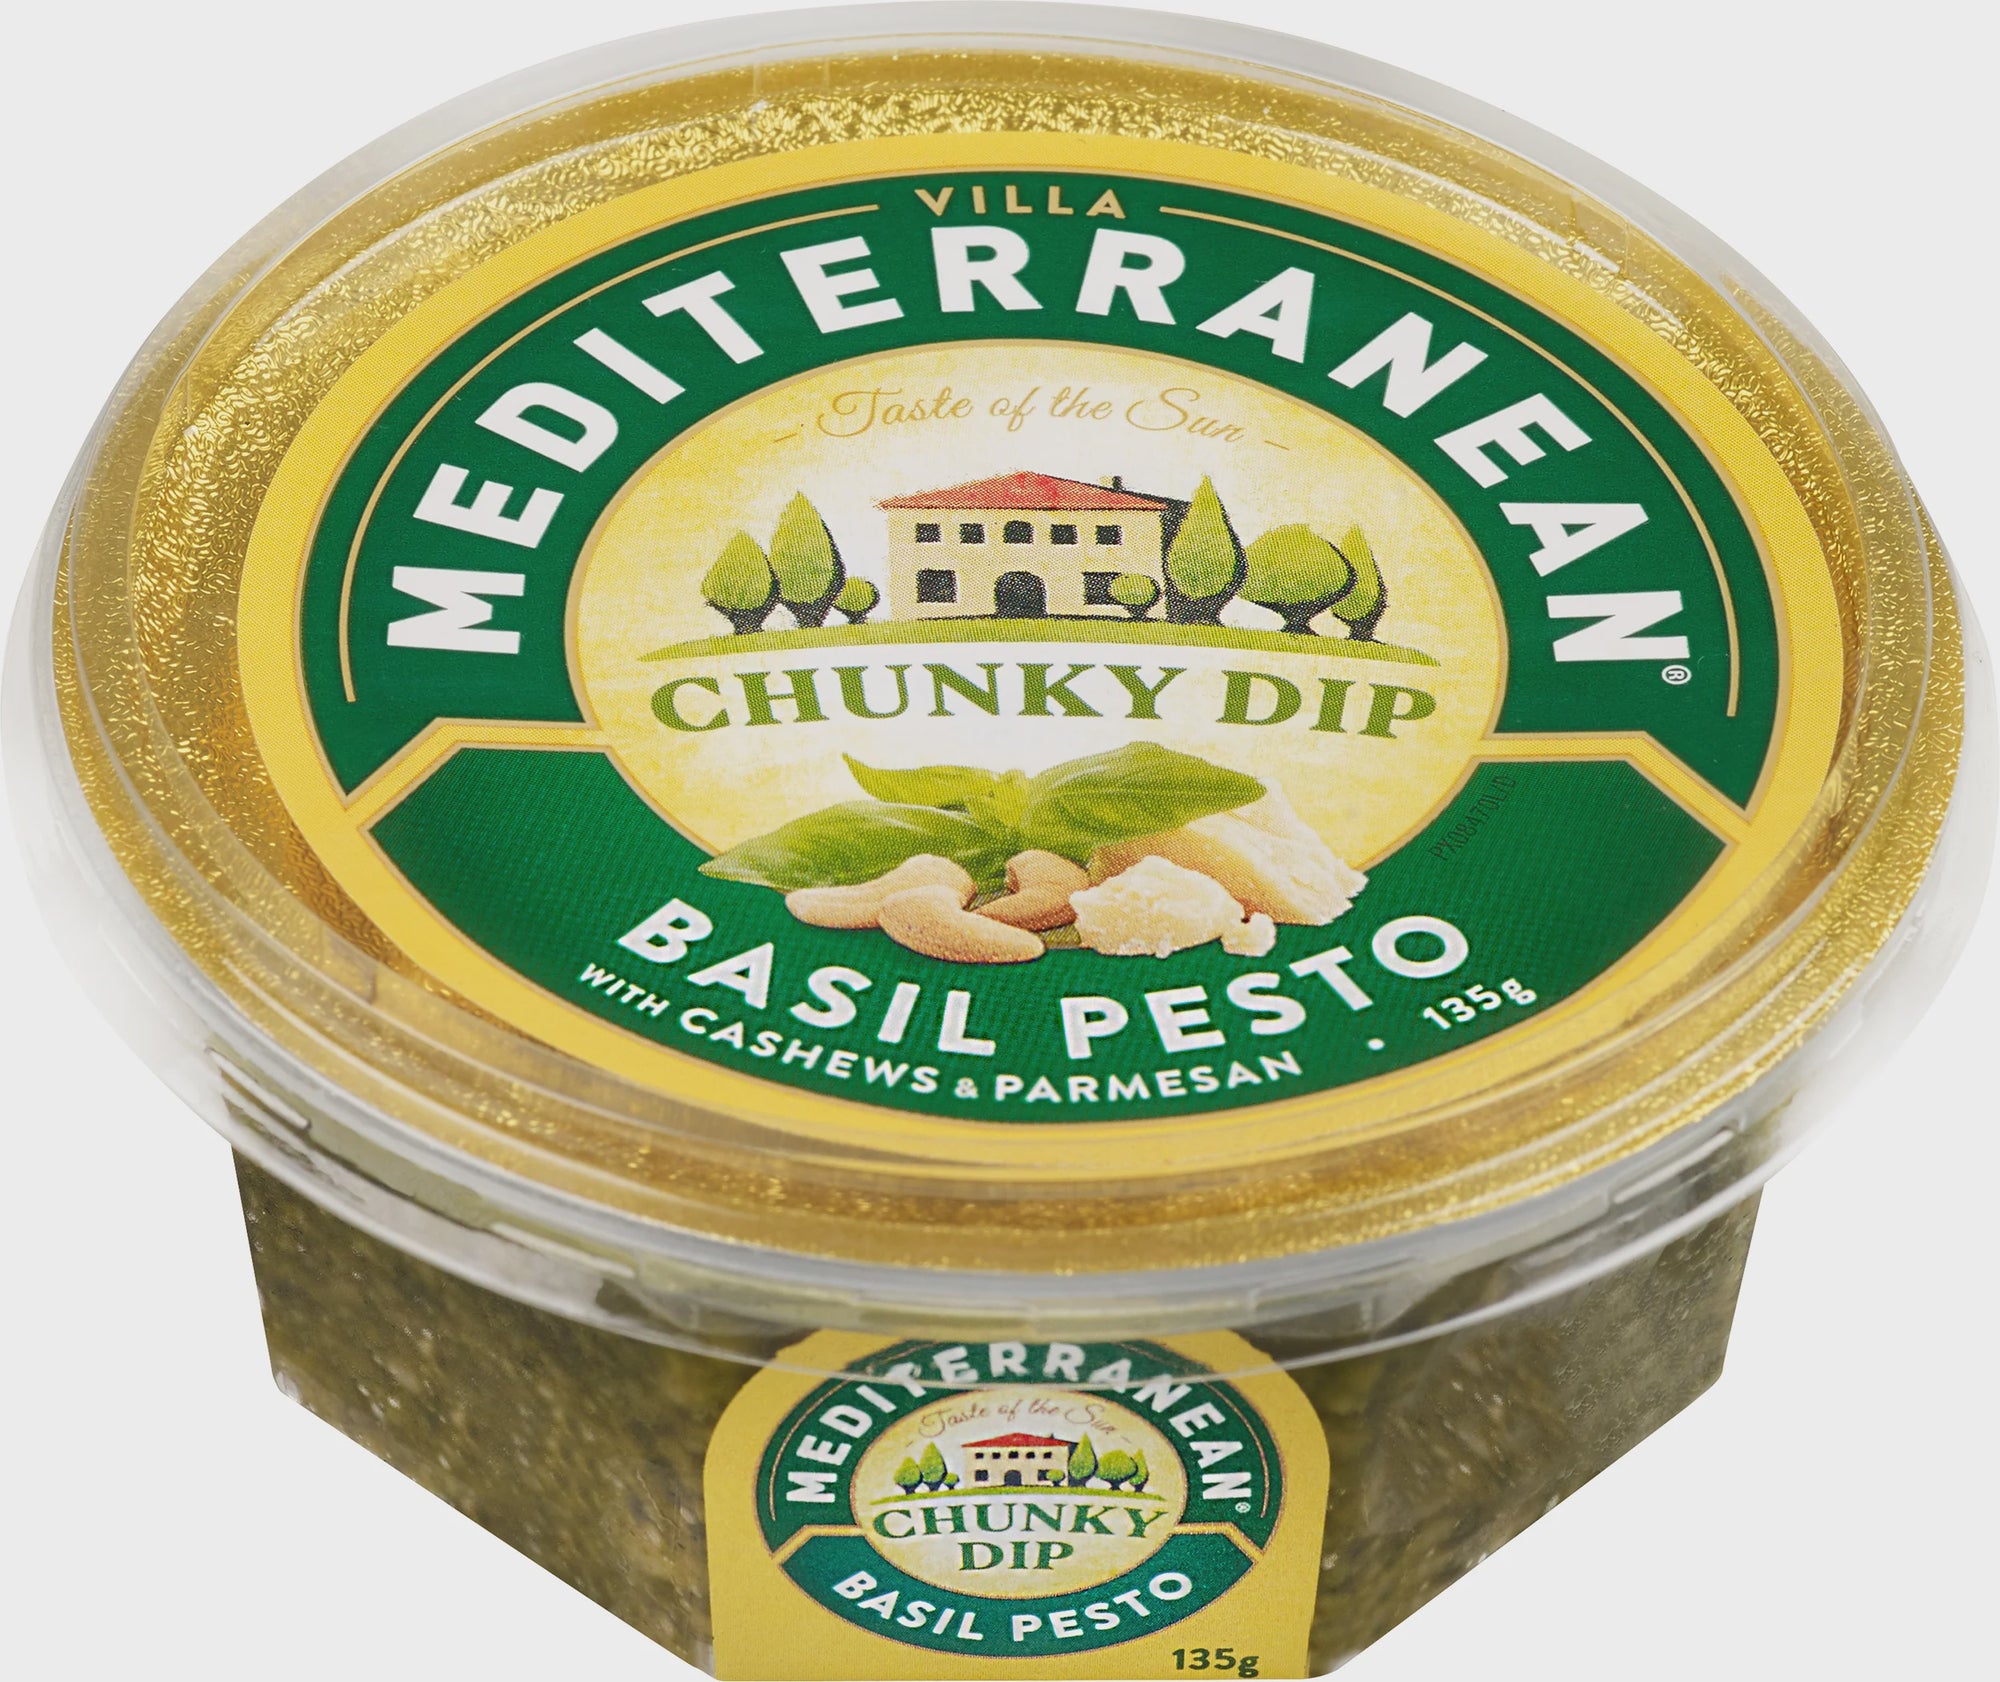 Mediterranean Basil Pesto Cashews & Parmesan Chunky Dip 135g